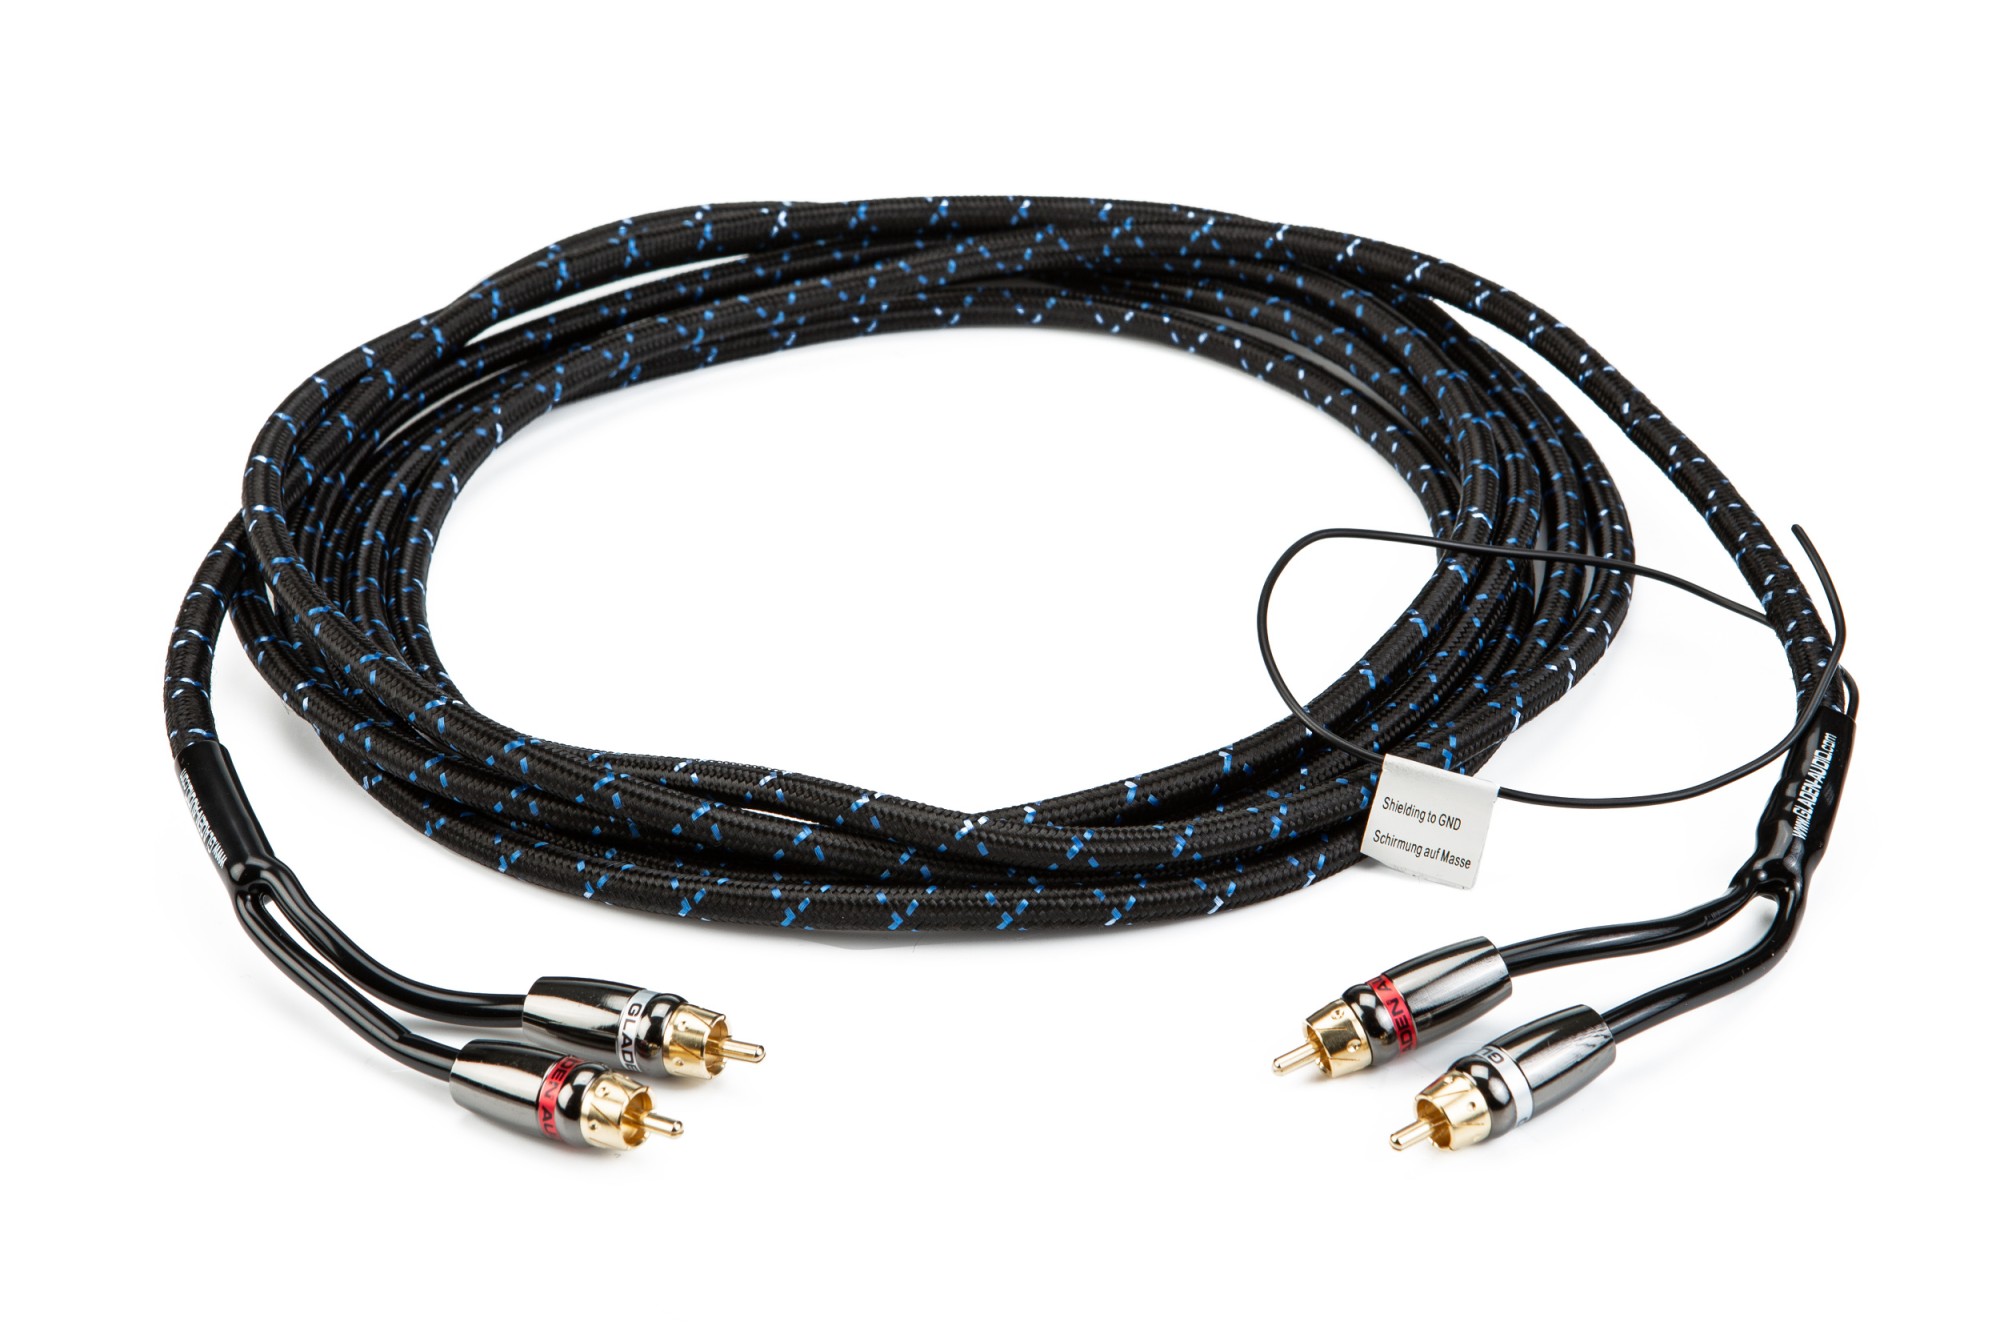 Signálový kabel Gladen Zero RCA 1,5 m